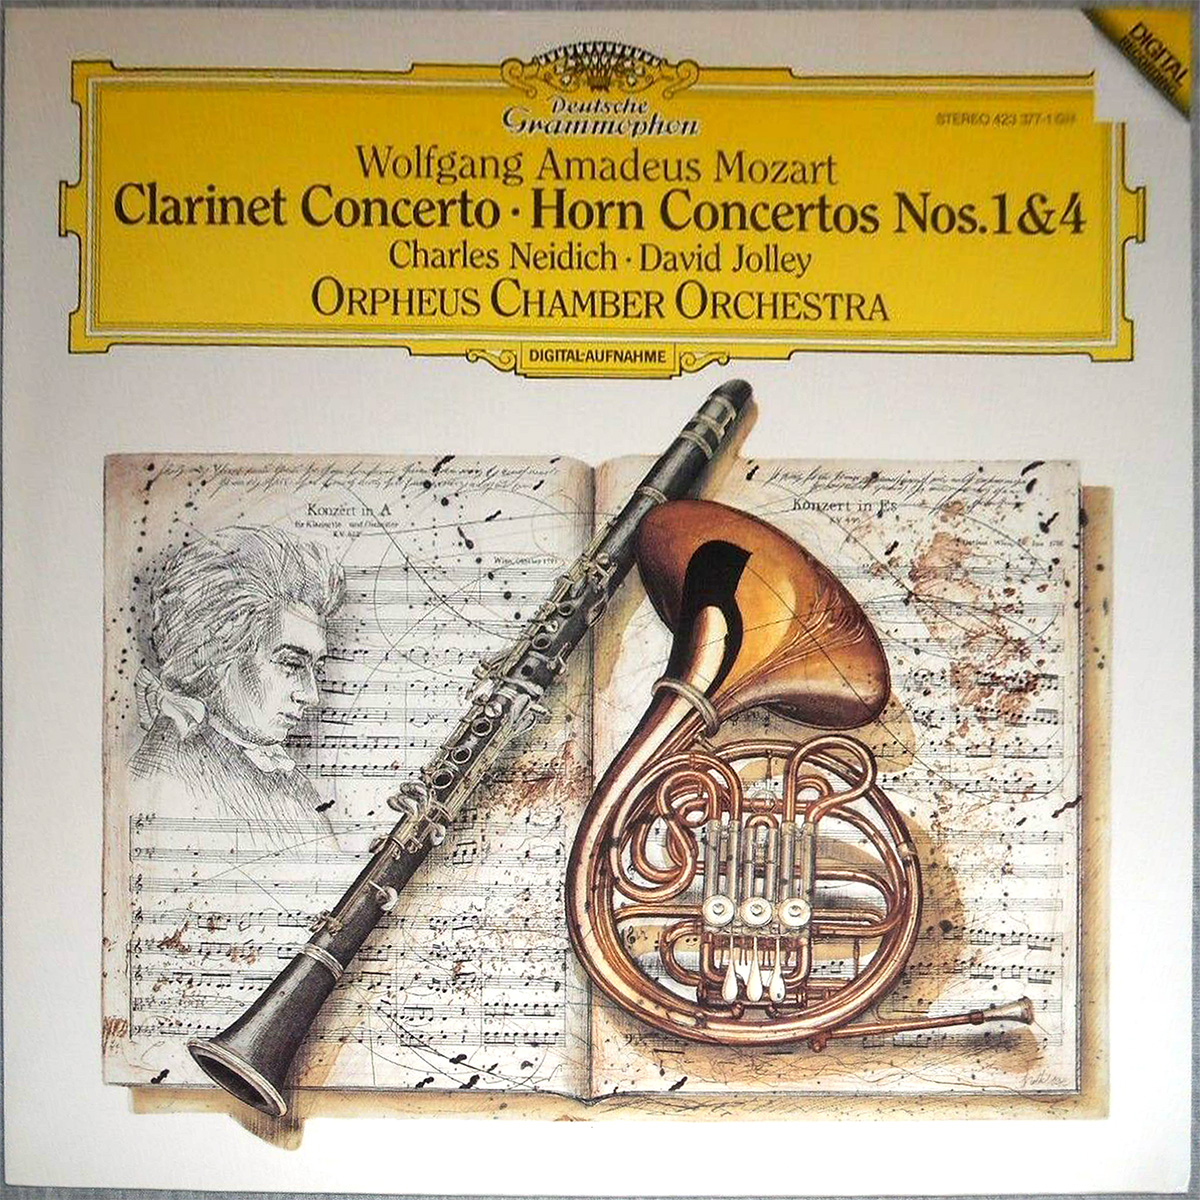 DGG 423 377 Mozart Concertos Clarinette Cor Orpheus Chamber Orchestra DGG Digital Aufnahme